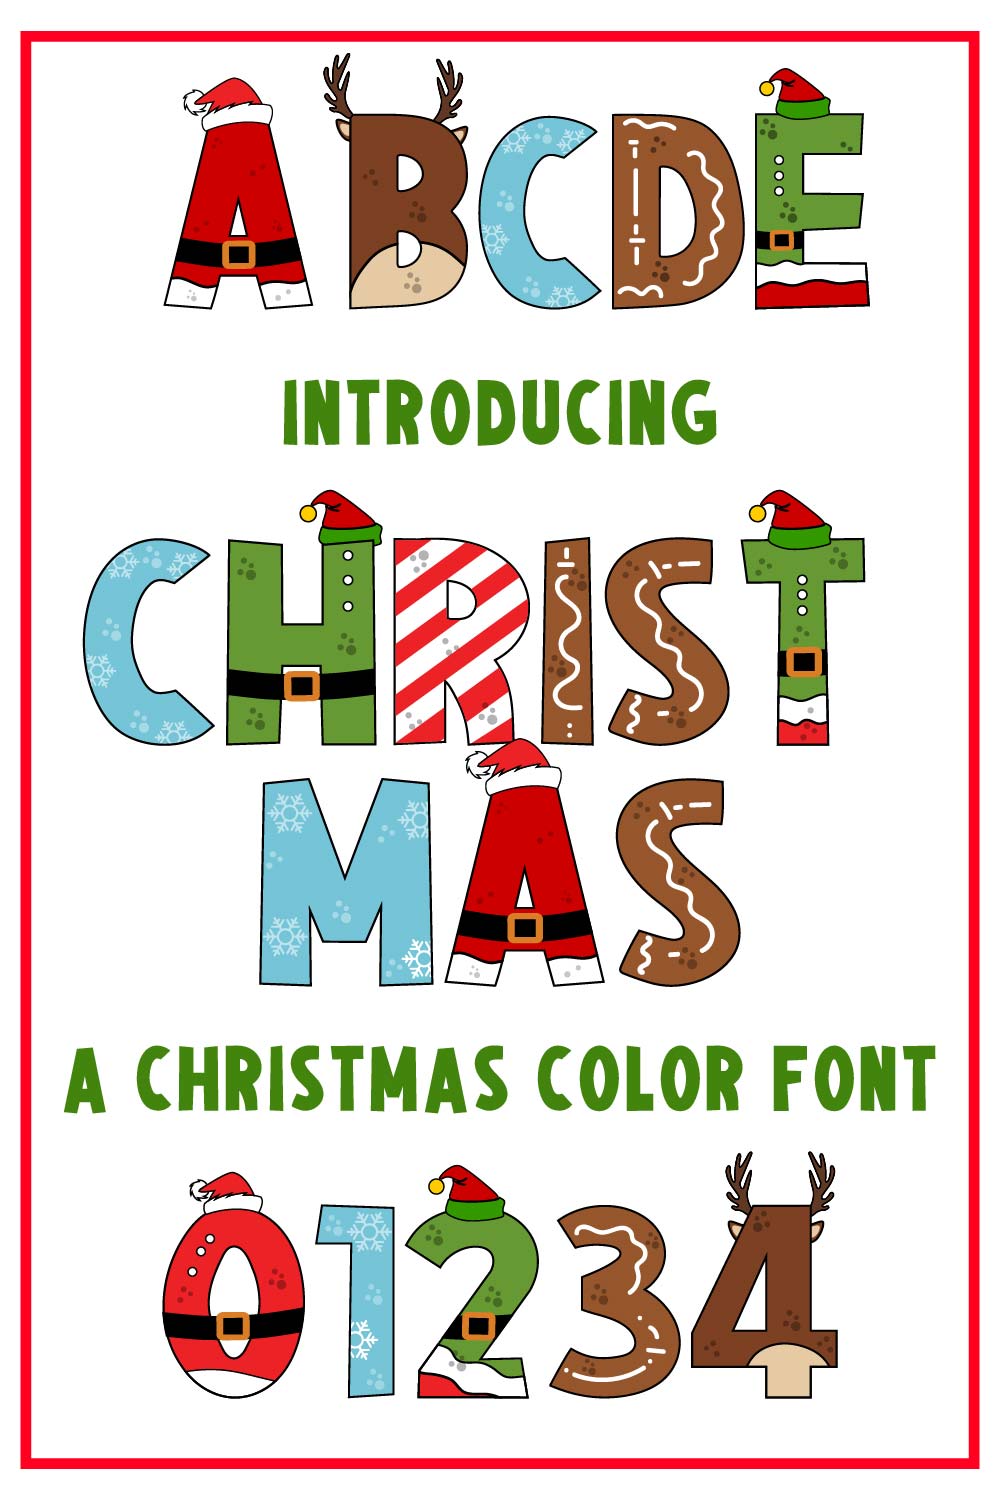 Christmas Color Font - pinterest image preview.